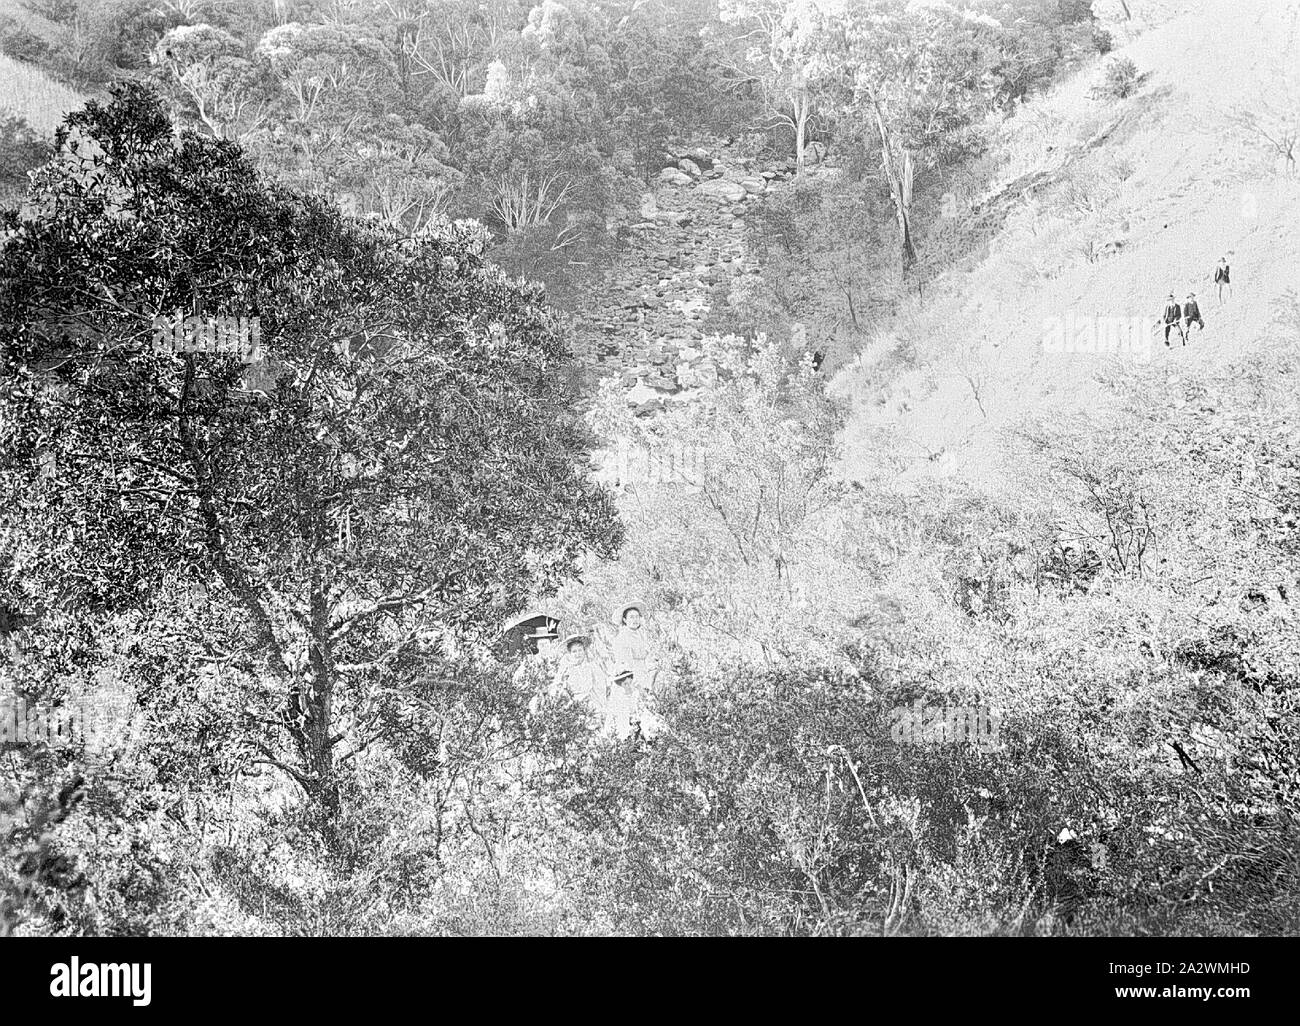 Negative - People on Hillside at Lal Lal Creek, Lal Lal, Victoria, 30 Sep 1896, People on a hillside at Lal Lal Creek Stock Photo